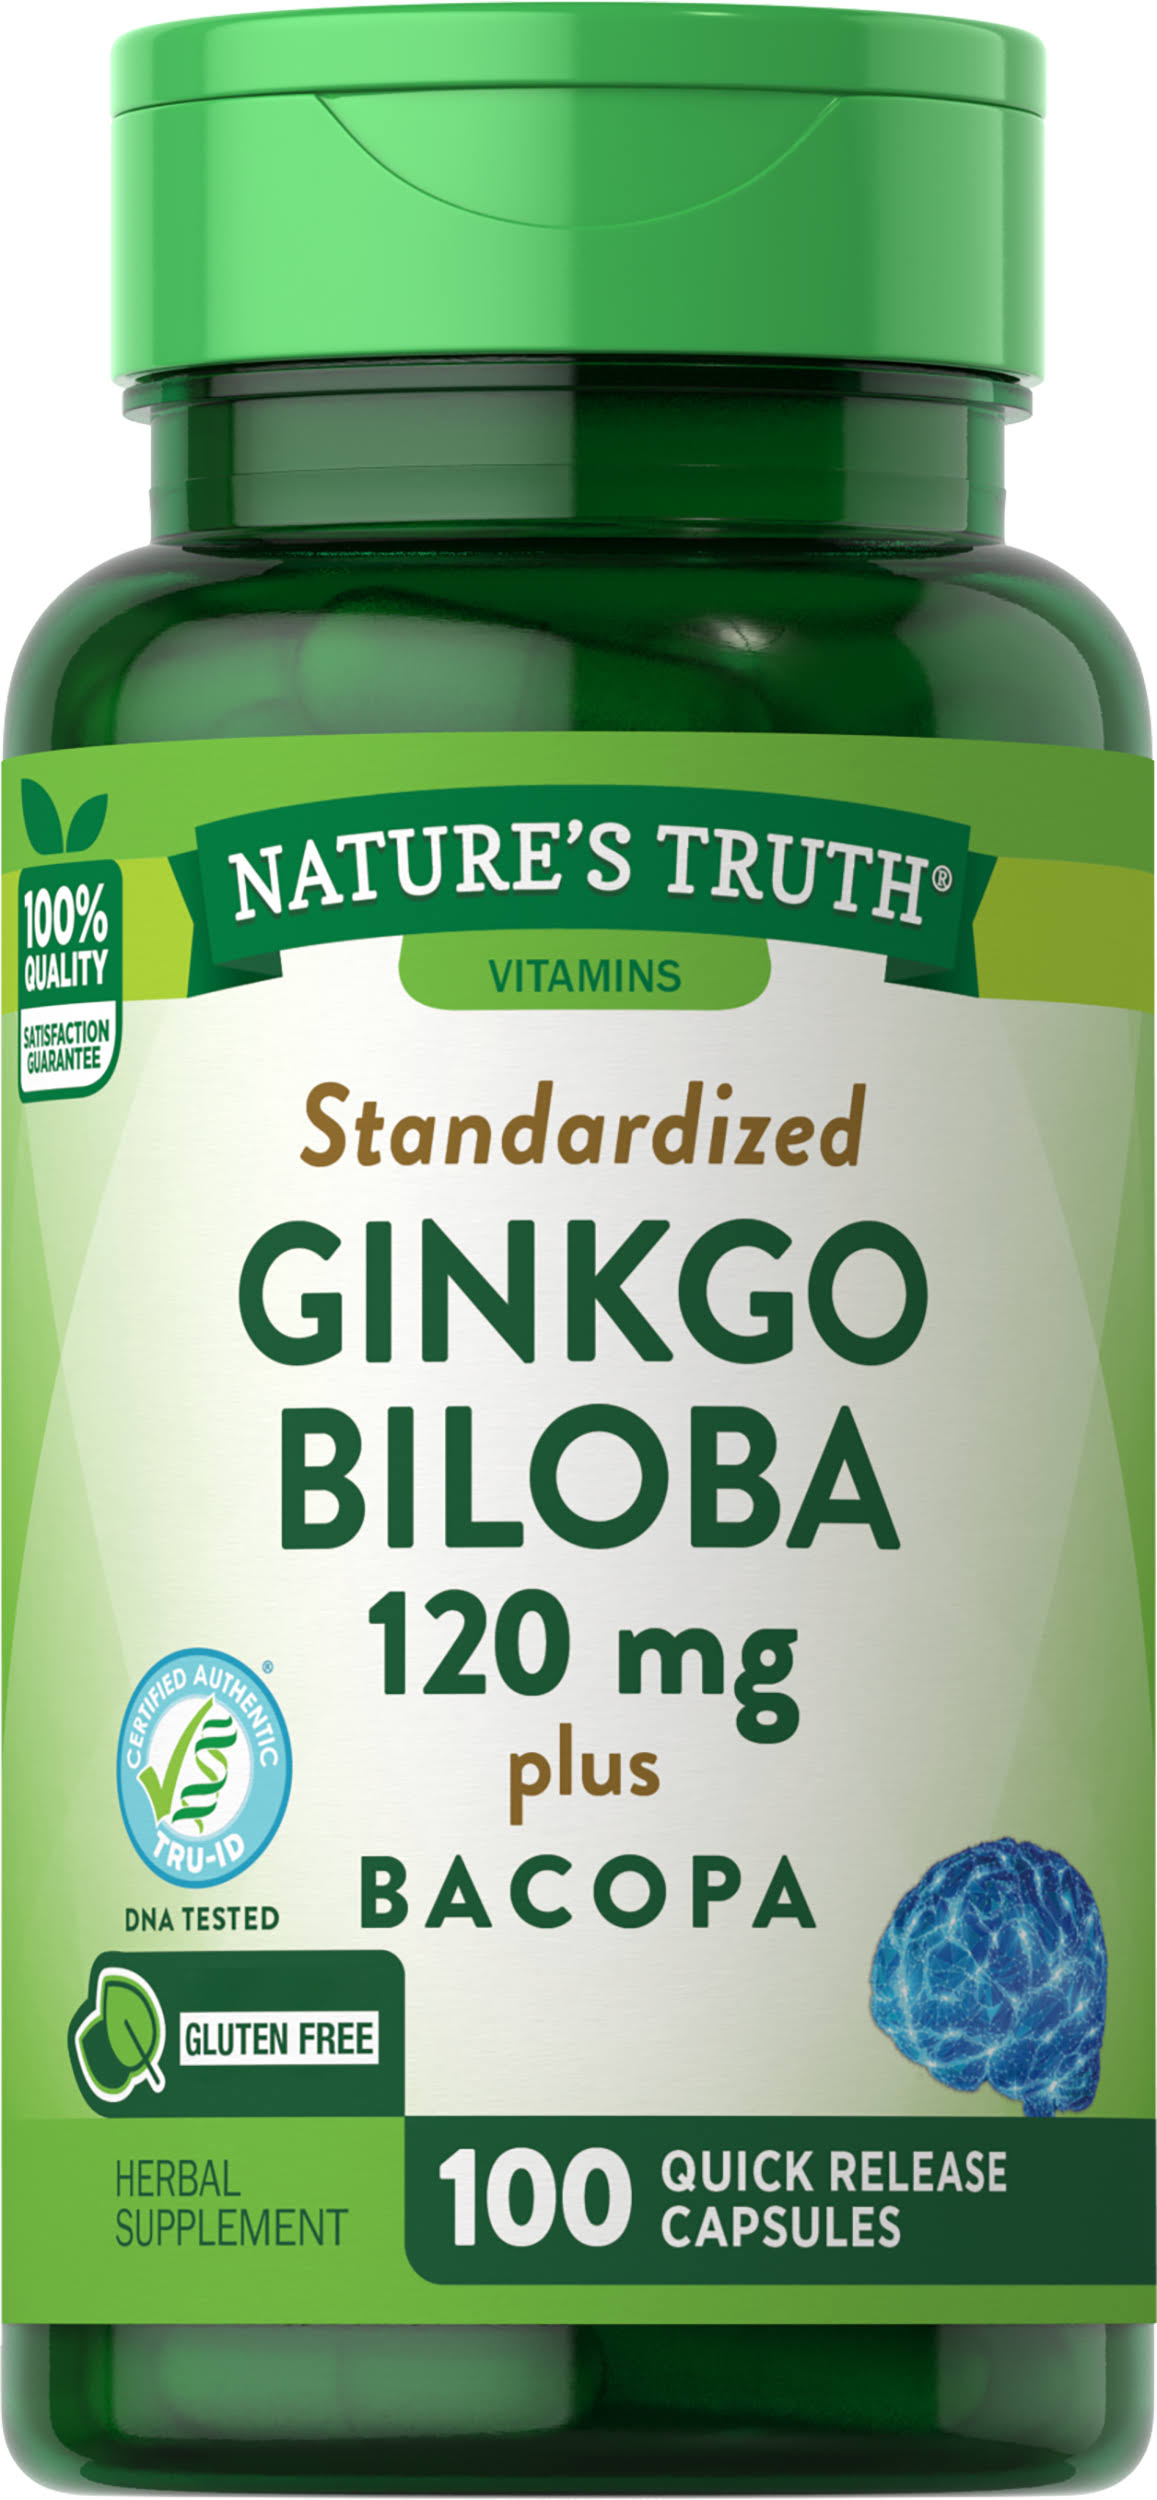 Nature's Truth Ginkgo Biloba Standardized Extract Vitamins - 100ct, 120mg